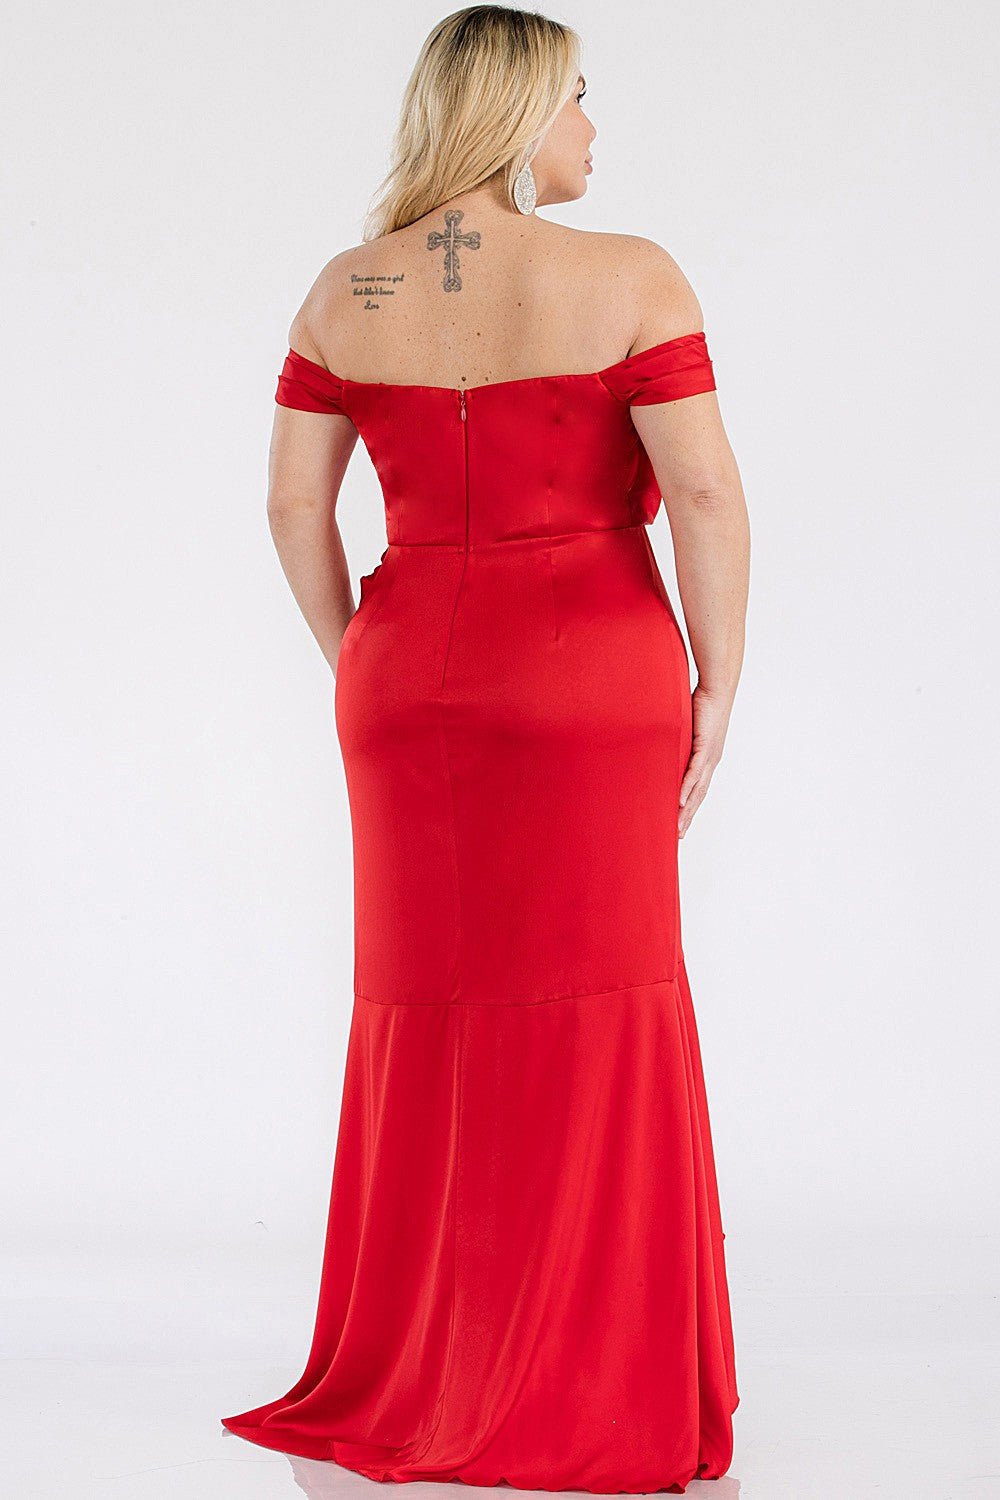 Sara - rojo - Lend the Trend renta de vestidos mexico